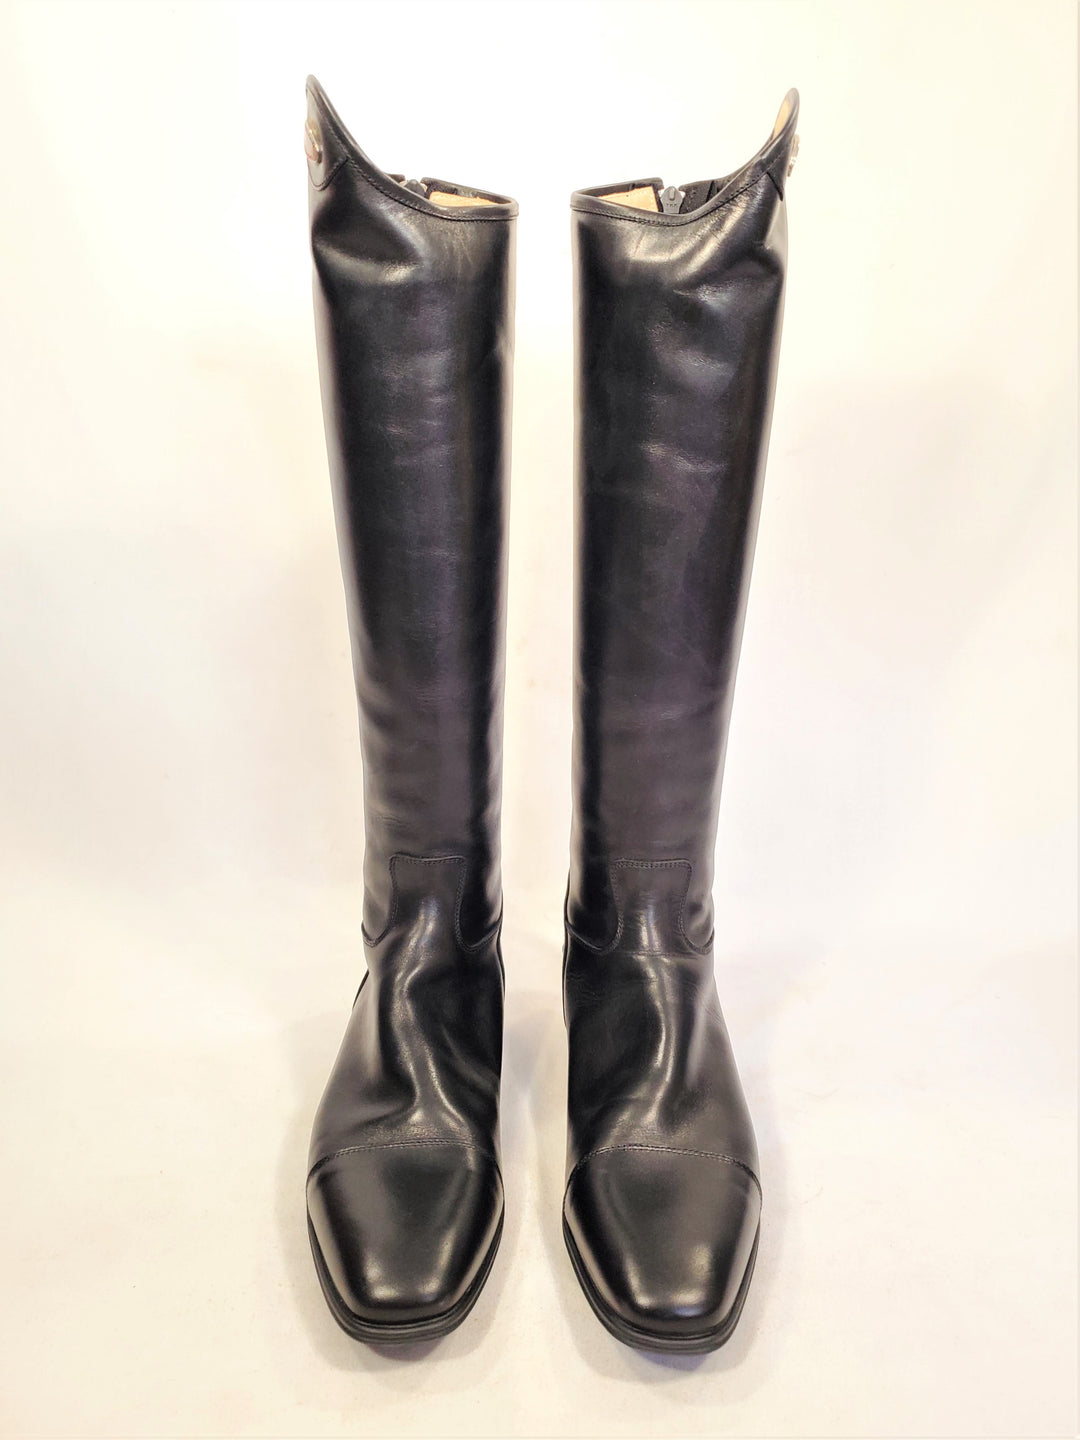 Parlanti Denver Dress Boots - 44 XL+ (Men's 11 XL Tall) - New!